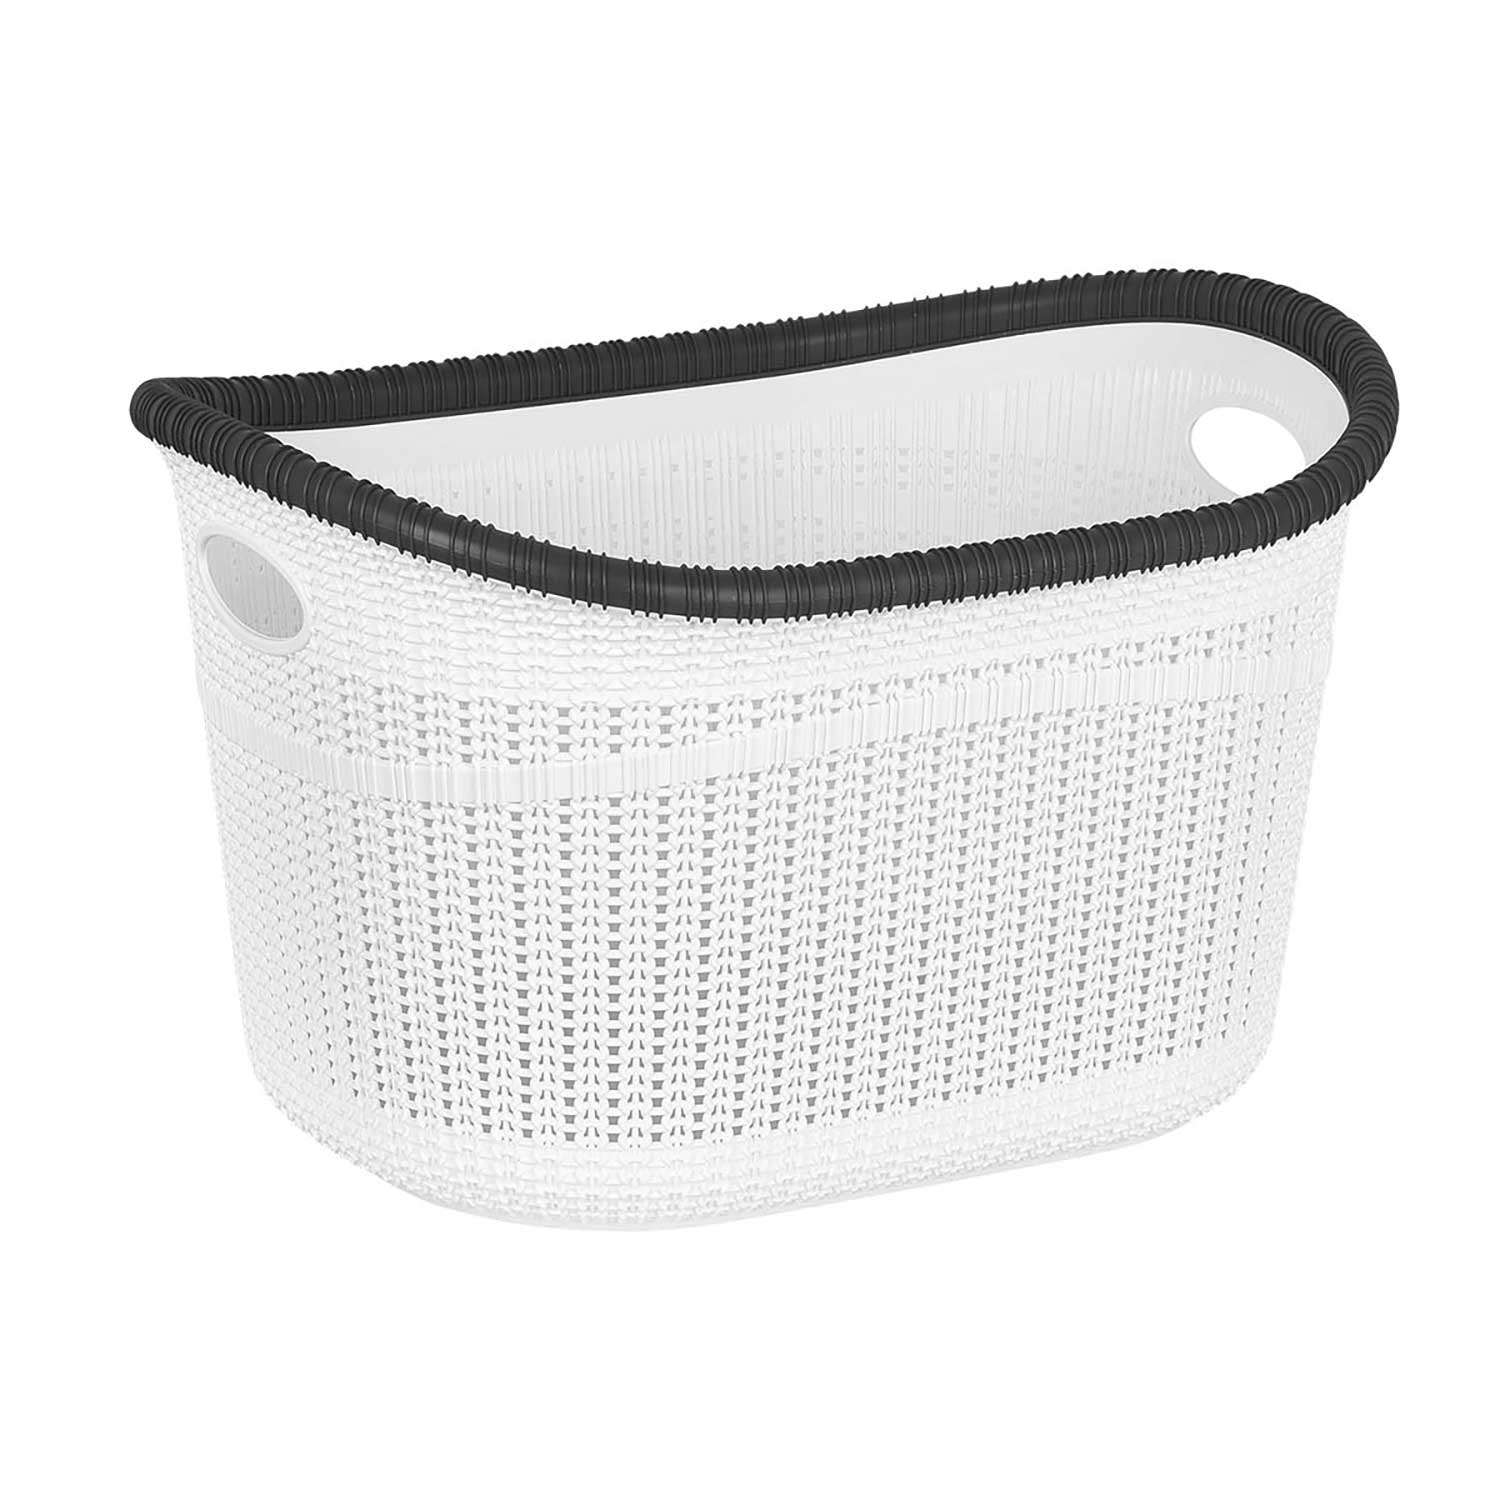 Laundry basket with black trim, 35L